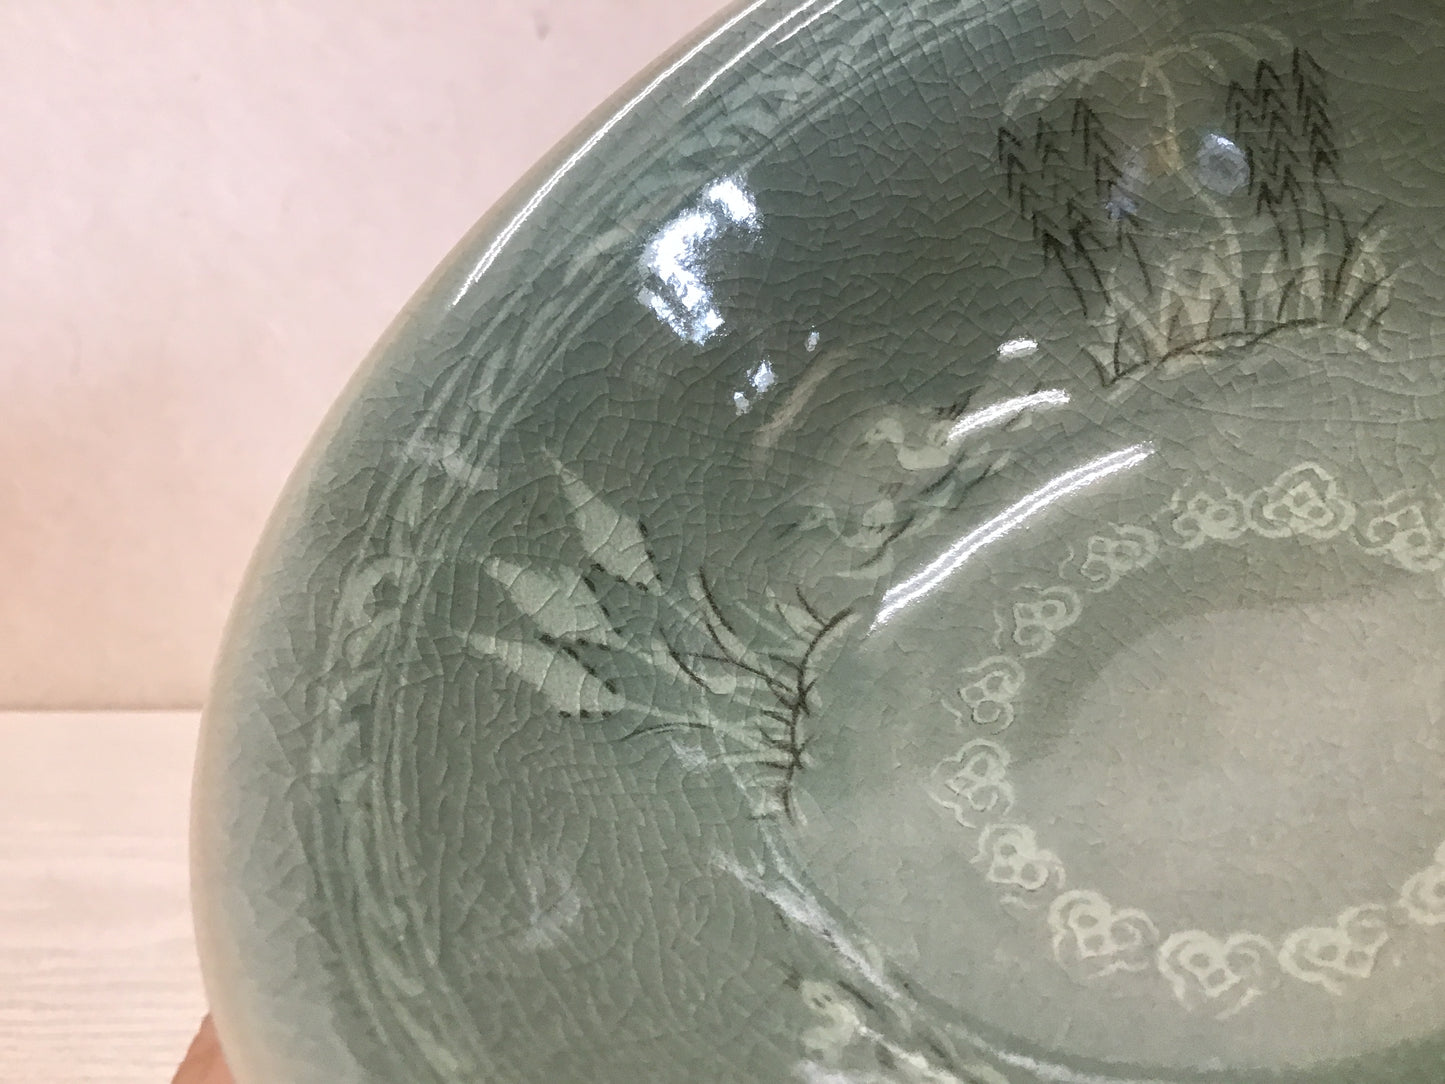 Y1690 CHAWAN Koryo celadon signed box Korean bowl pottery Korea tea ceremony